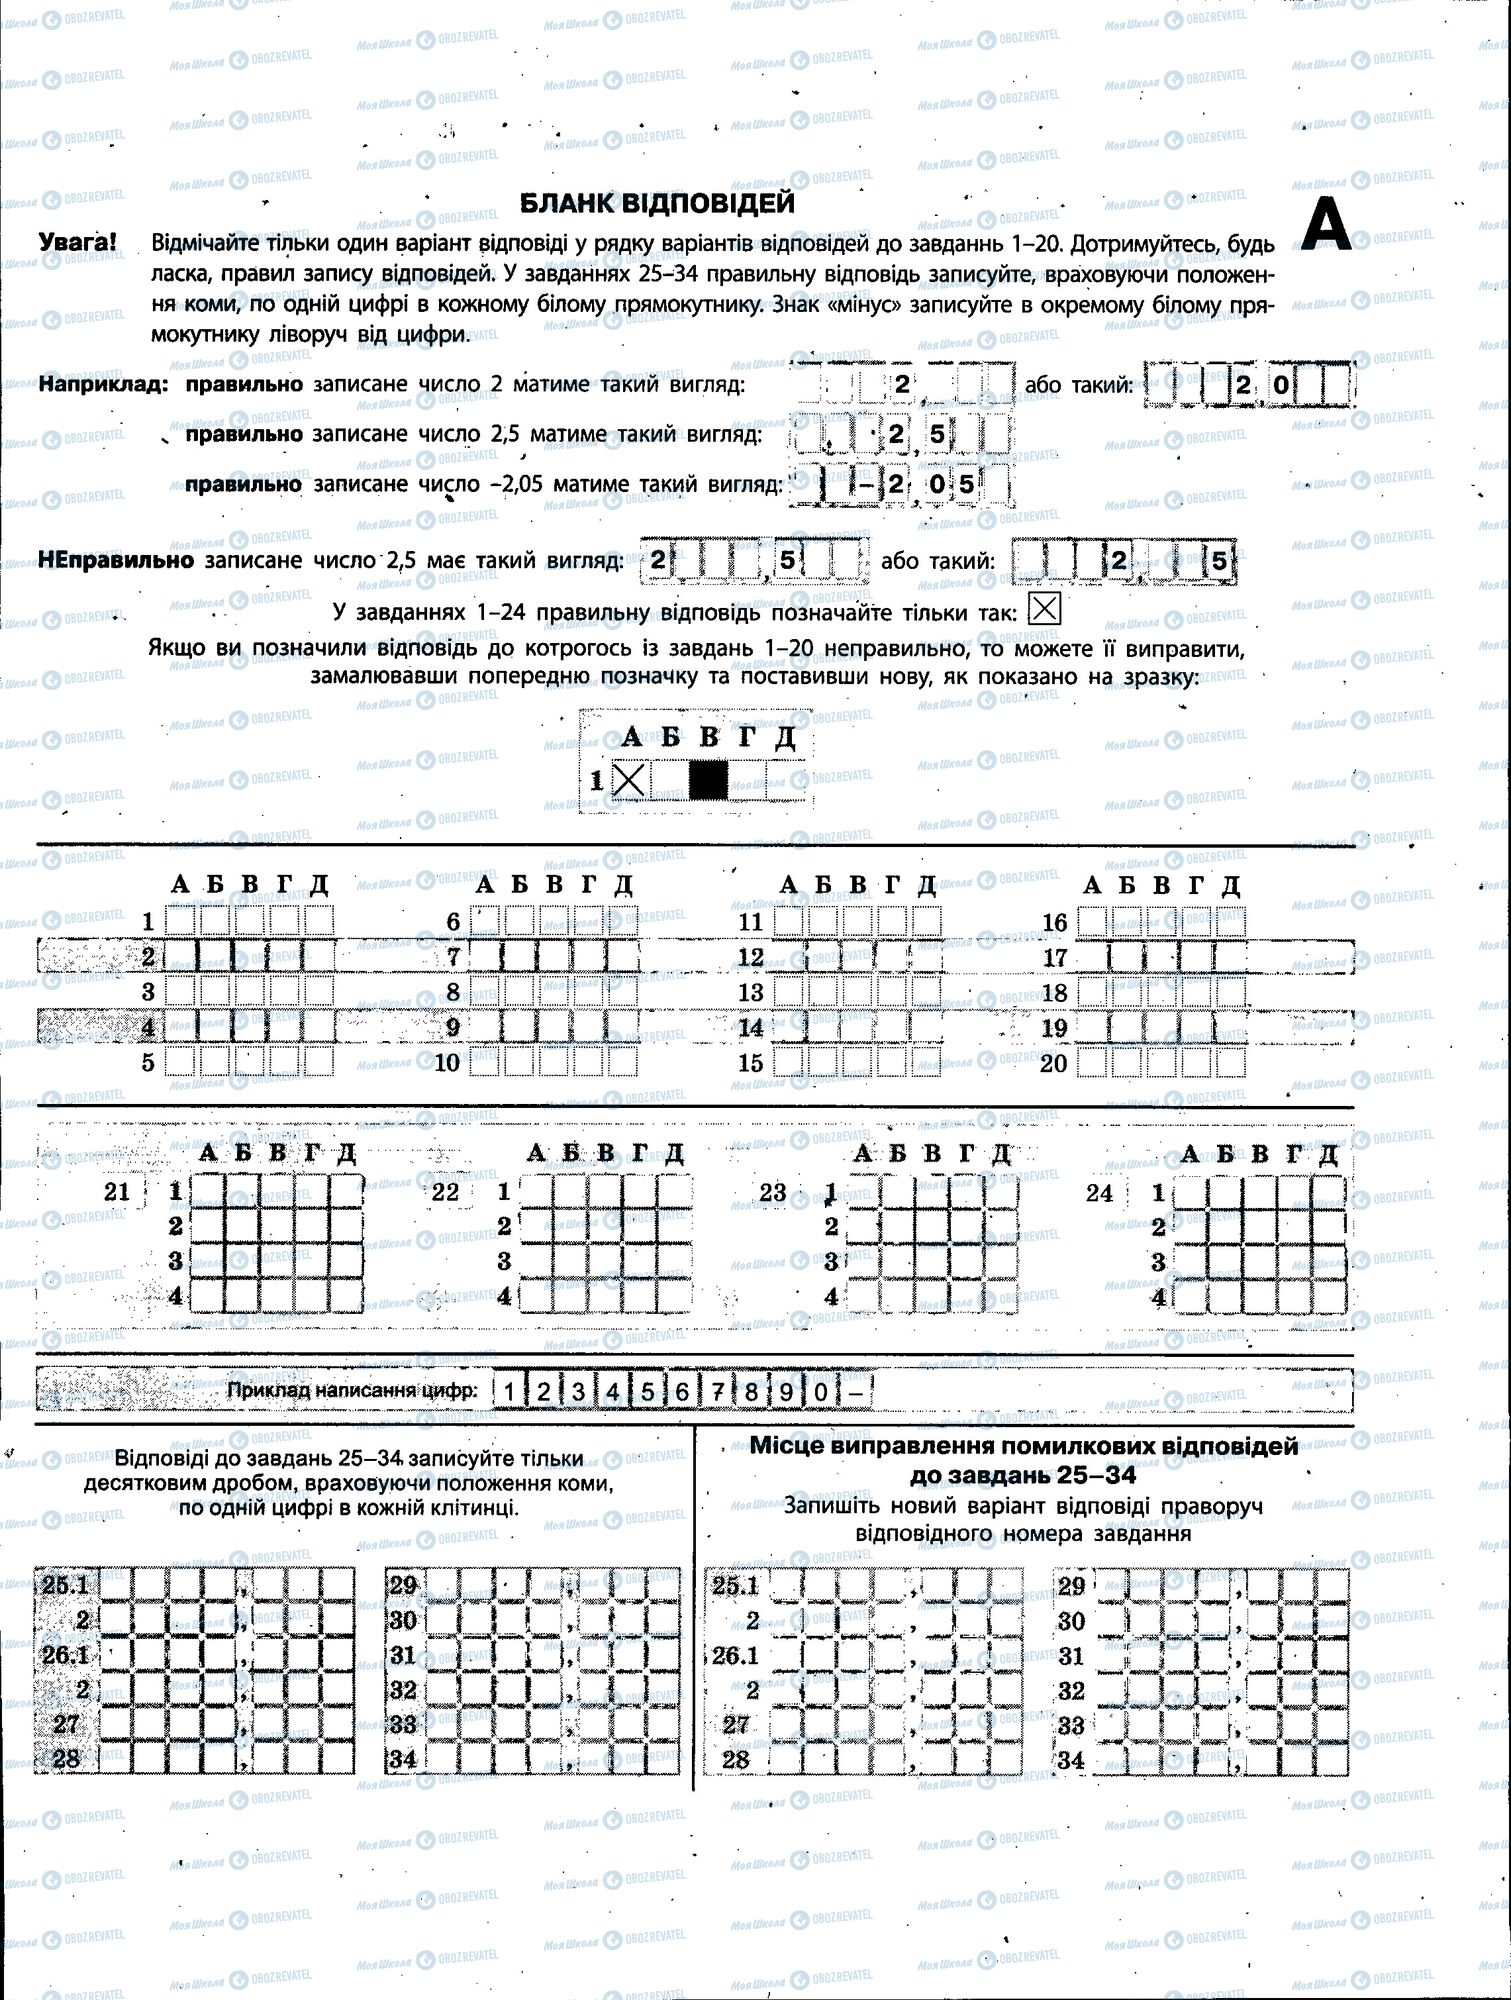 ЗНО Математика 11 класс страница 259